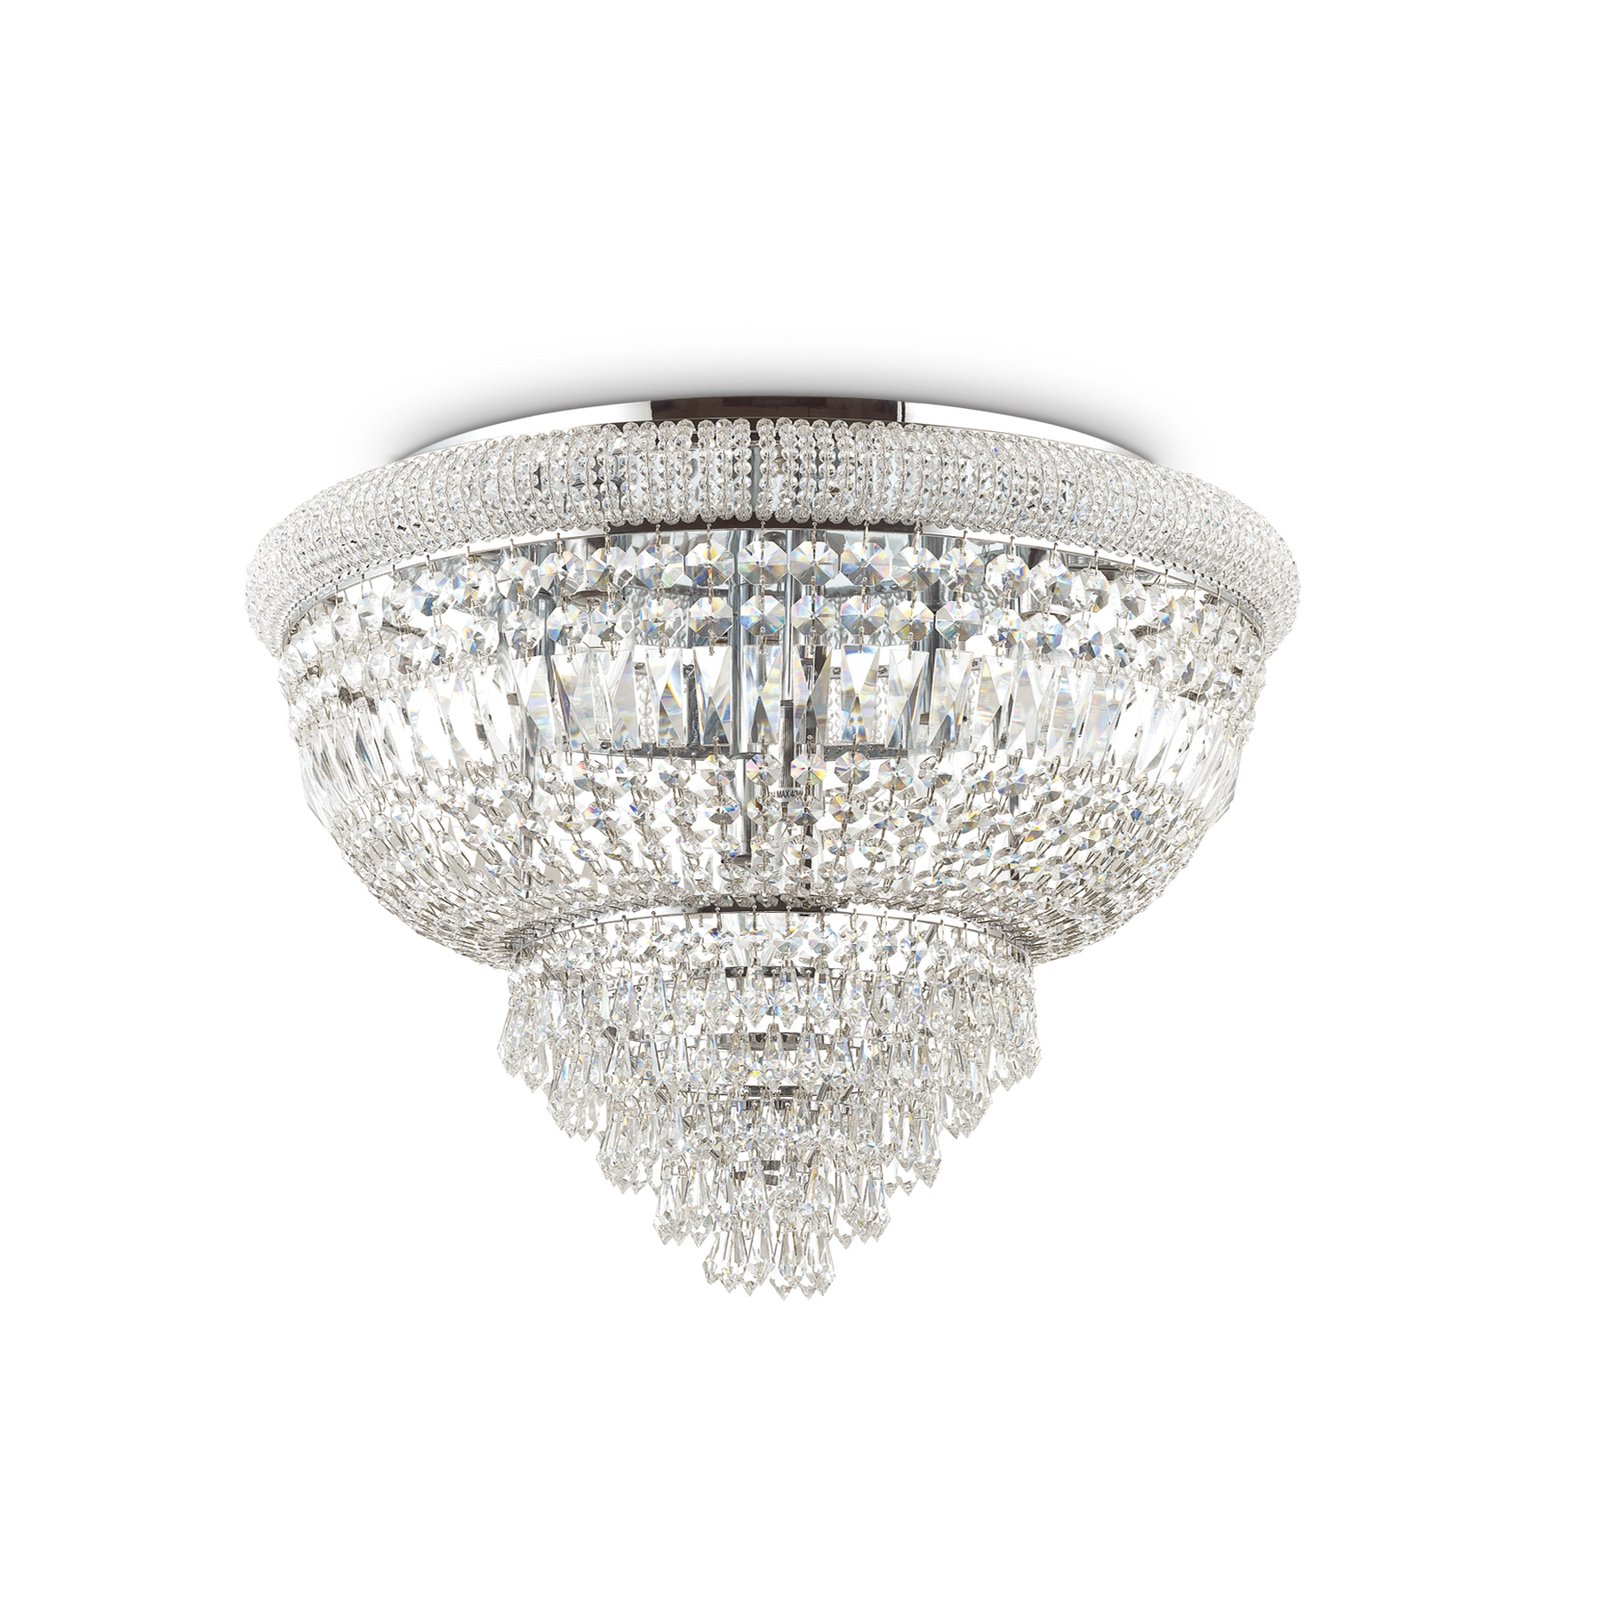 Ideal Lux lampa sufitowa Dubai, kolor chrom, kryształ, Ø 78 cm